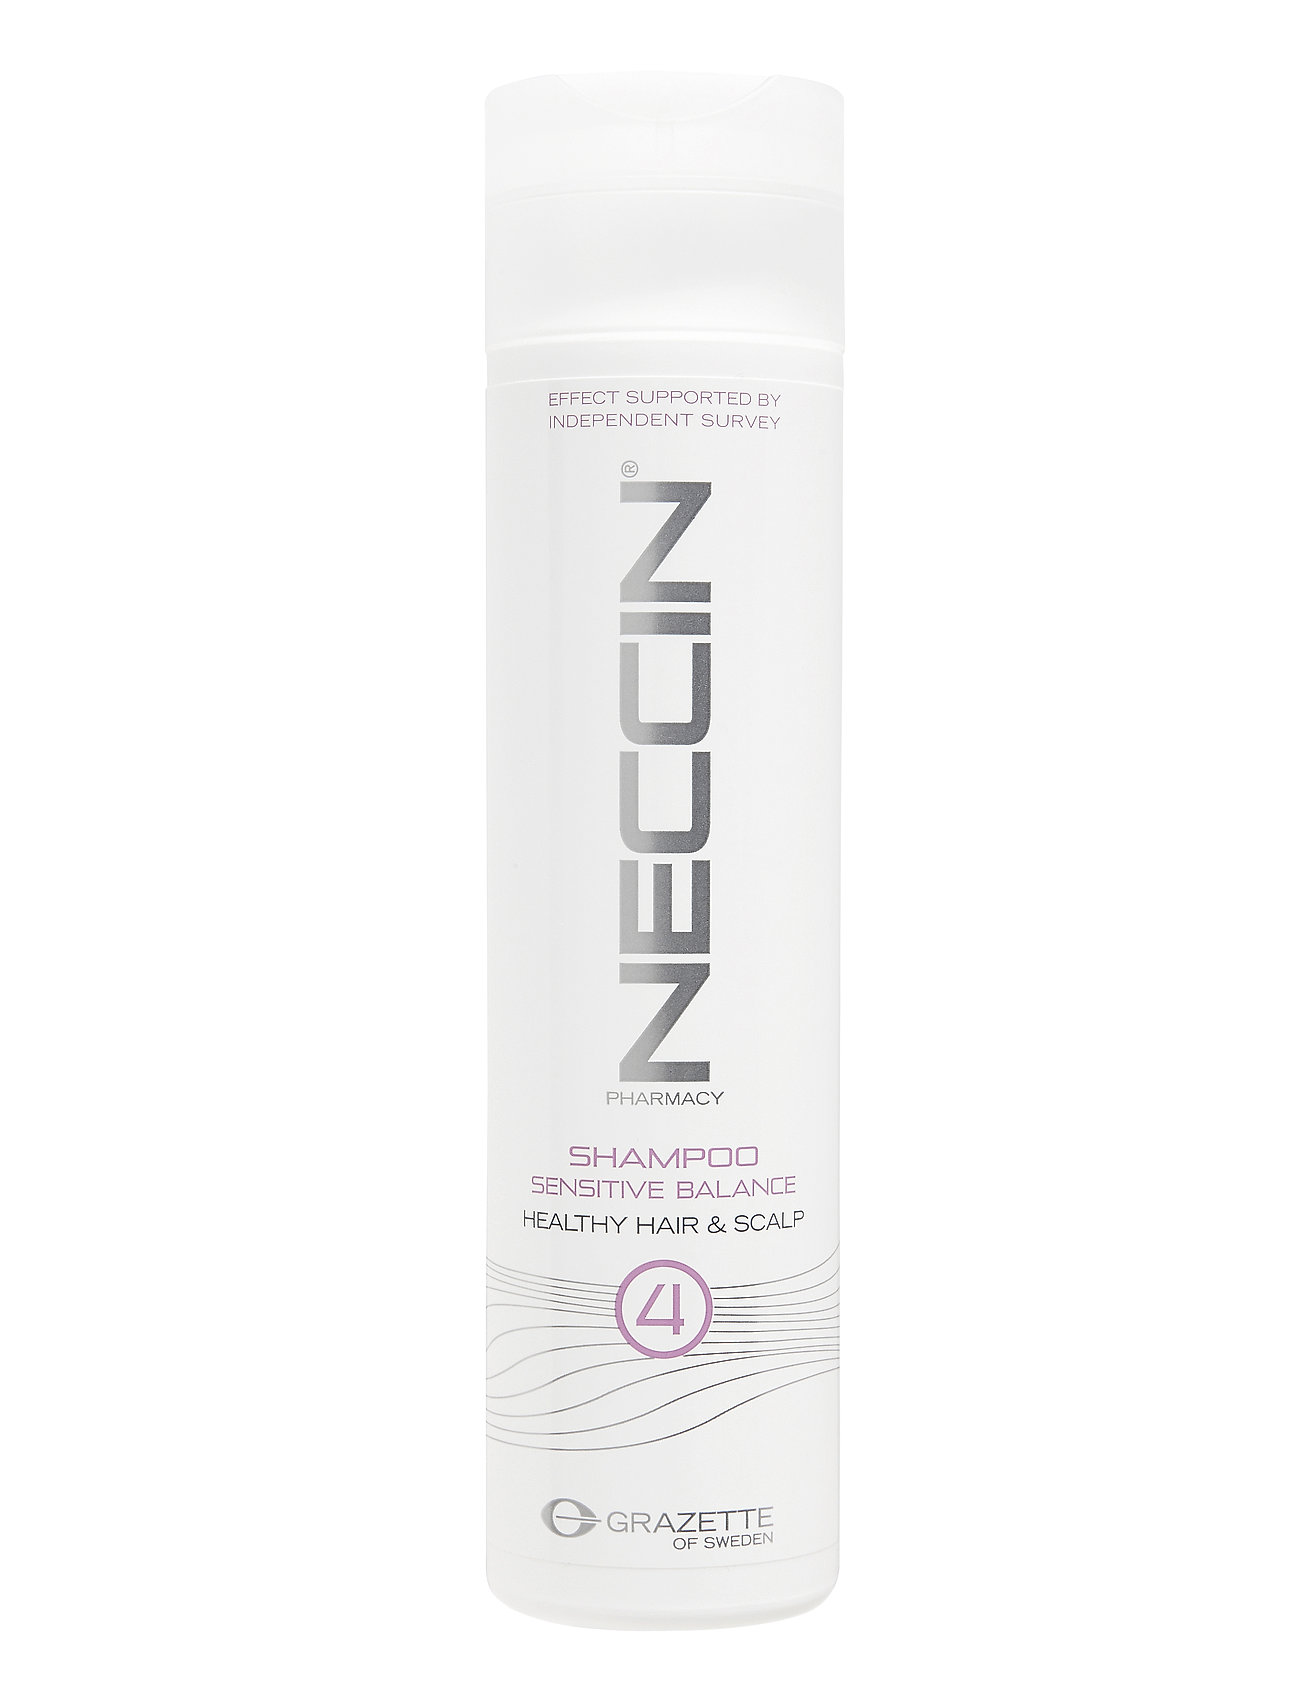 Neccin "Neccin 4 Sensitive Balance Shampoo Nude Neccin"